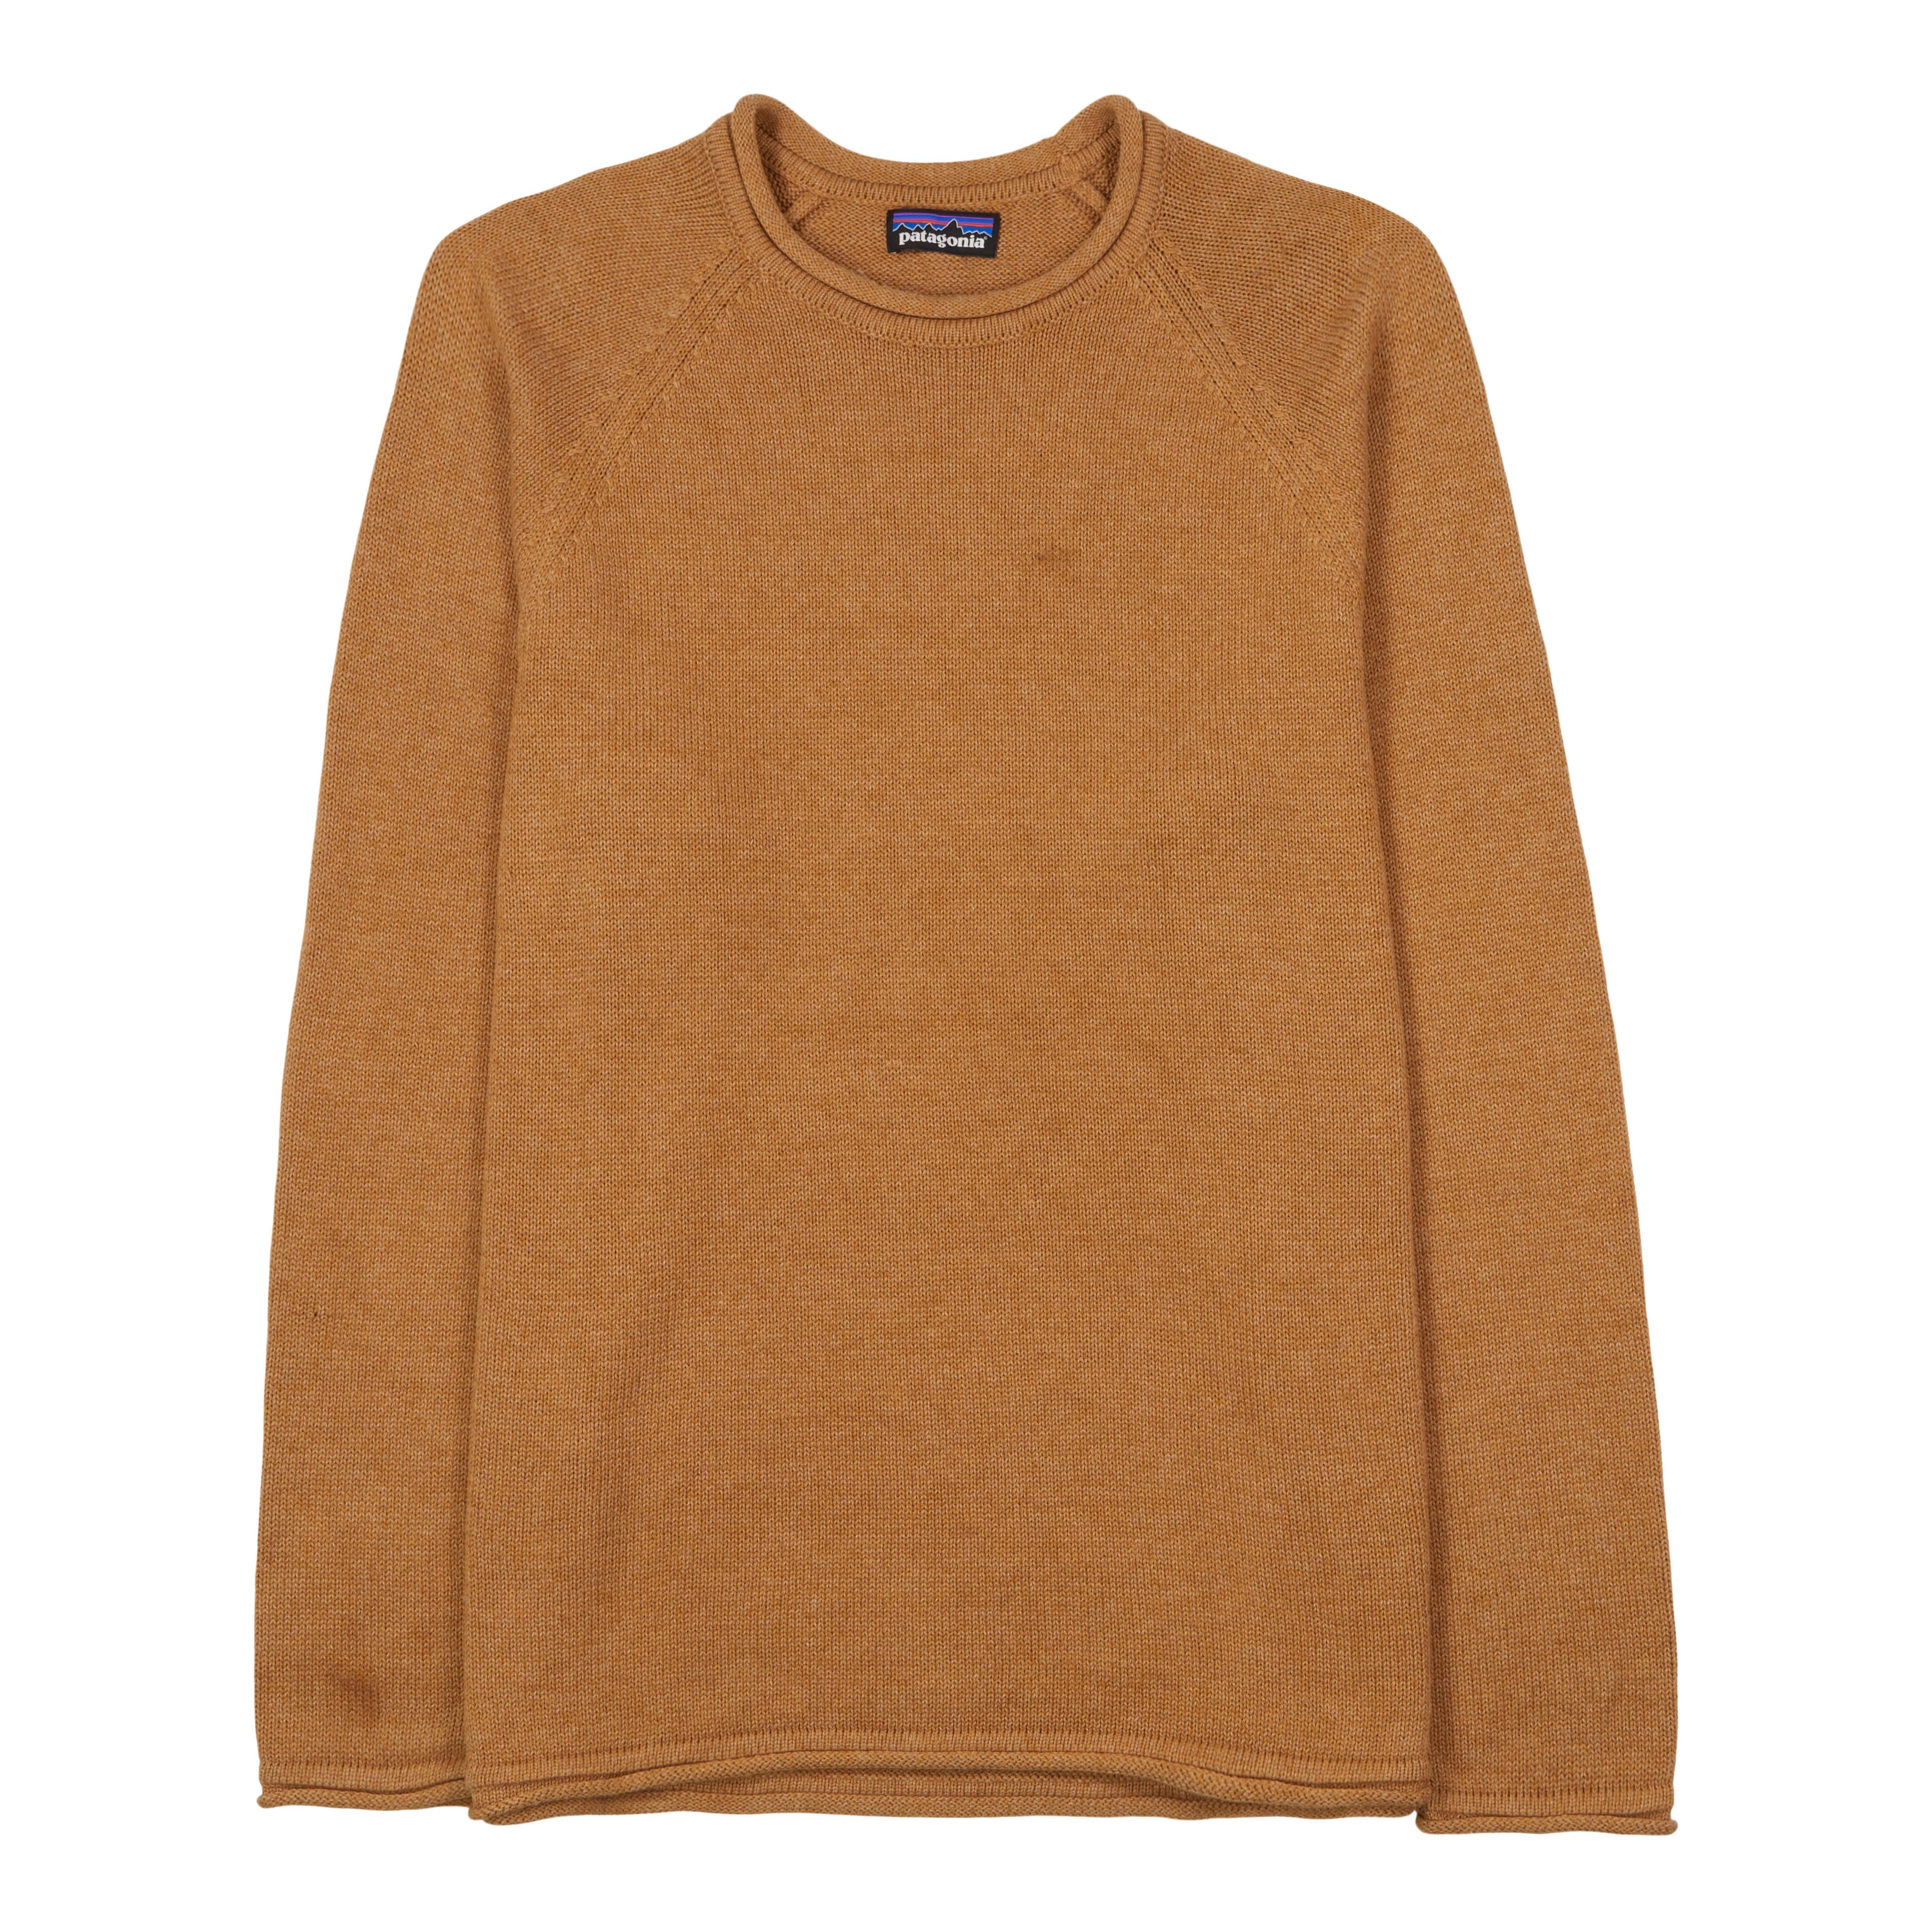 M's Ponderosa Pine Roll-Neck Sweater